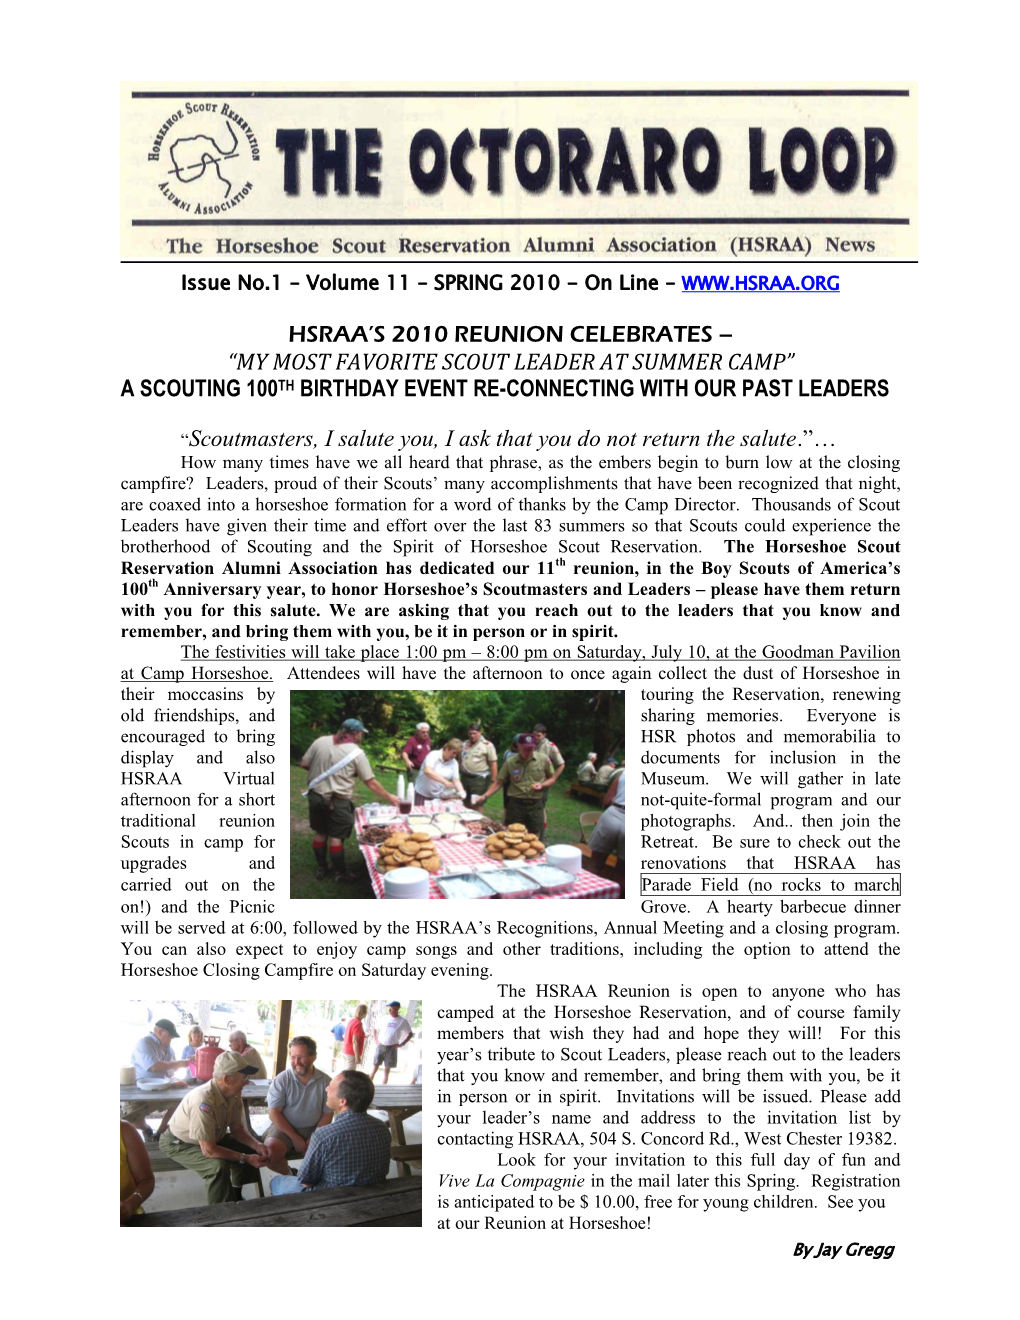 The Octoraro Loop